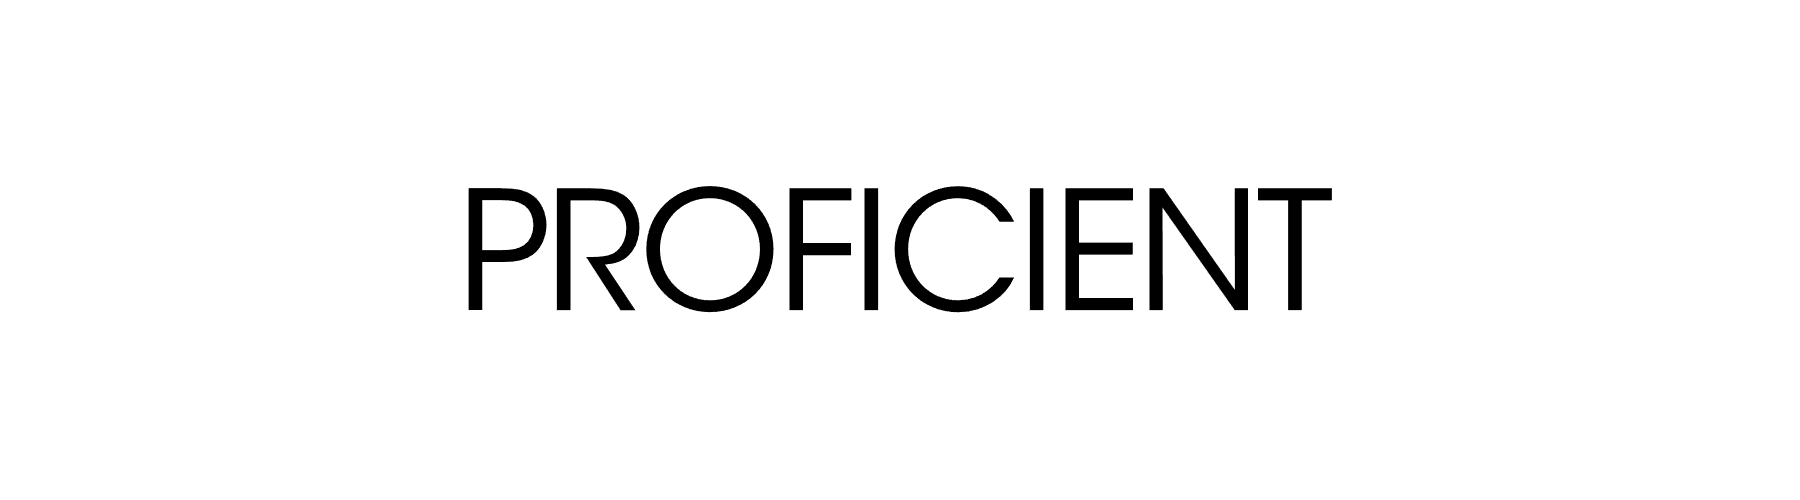 Proficient logo